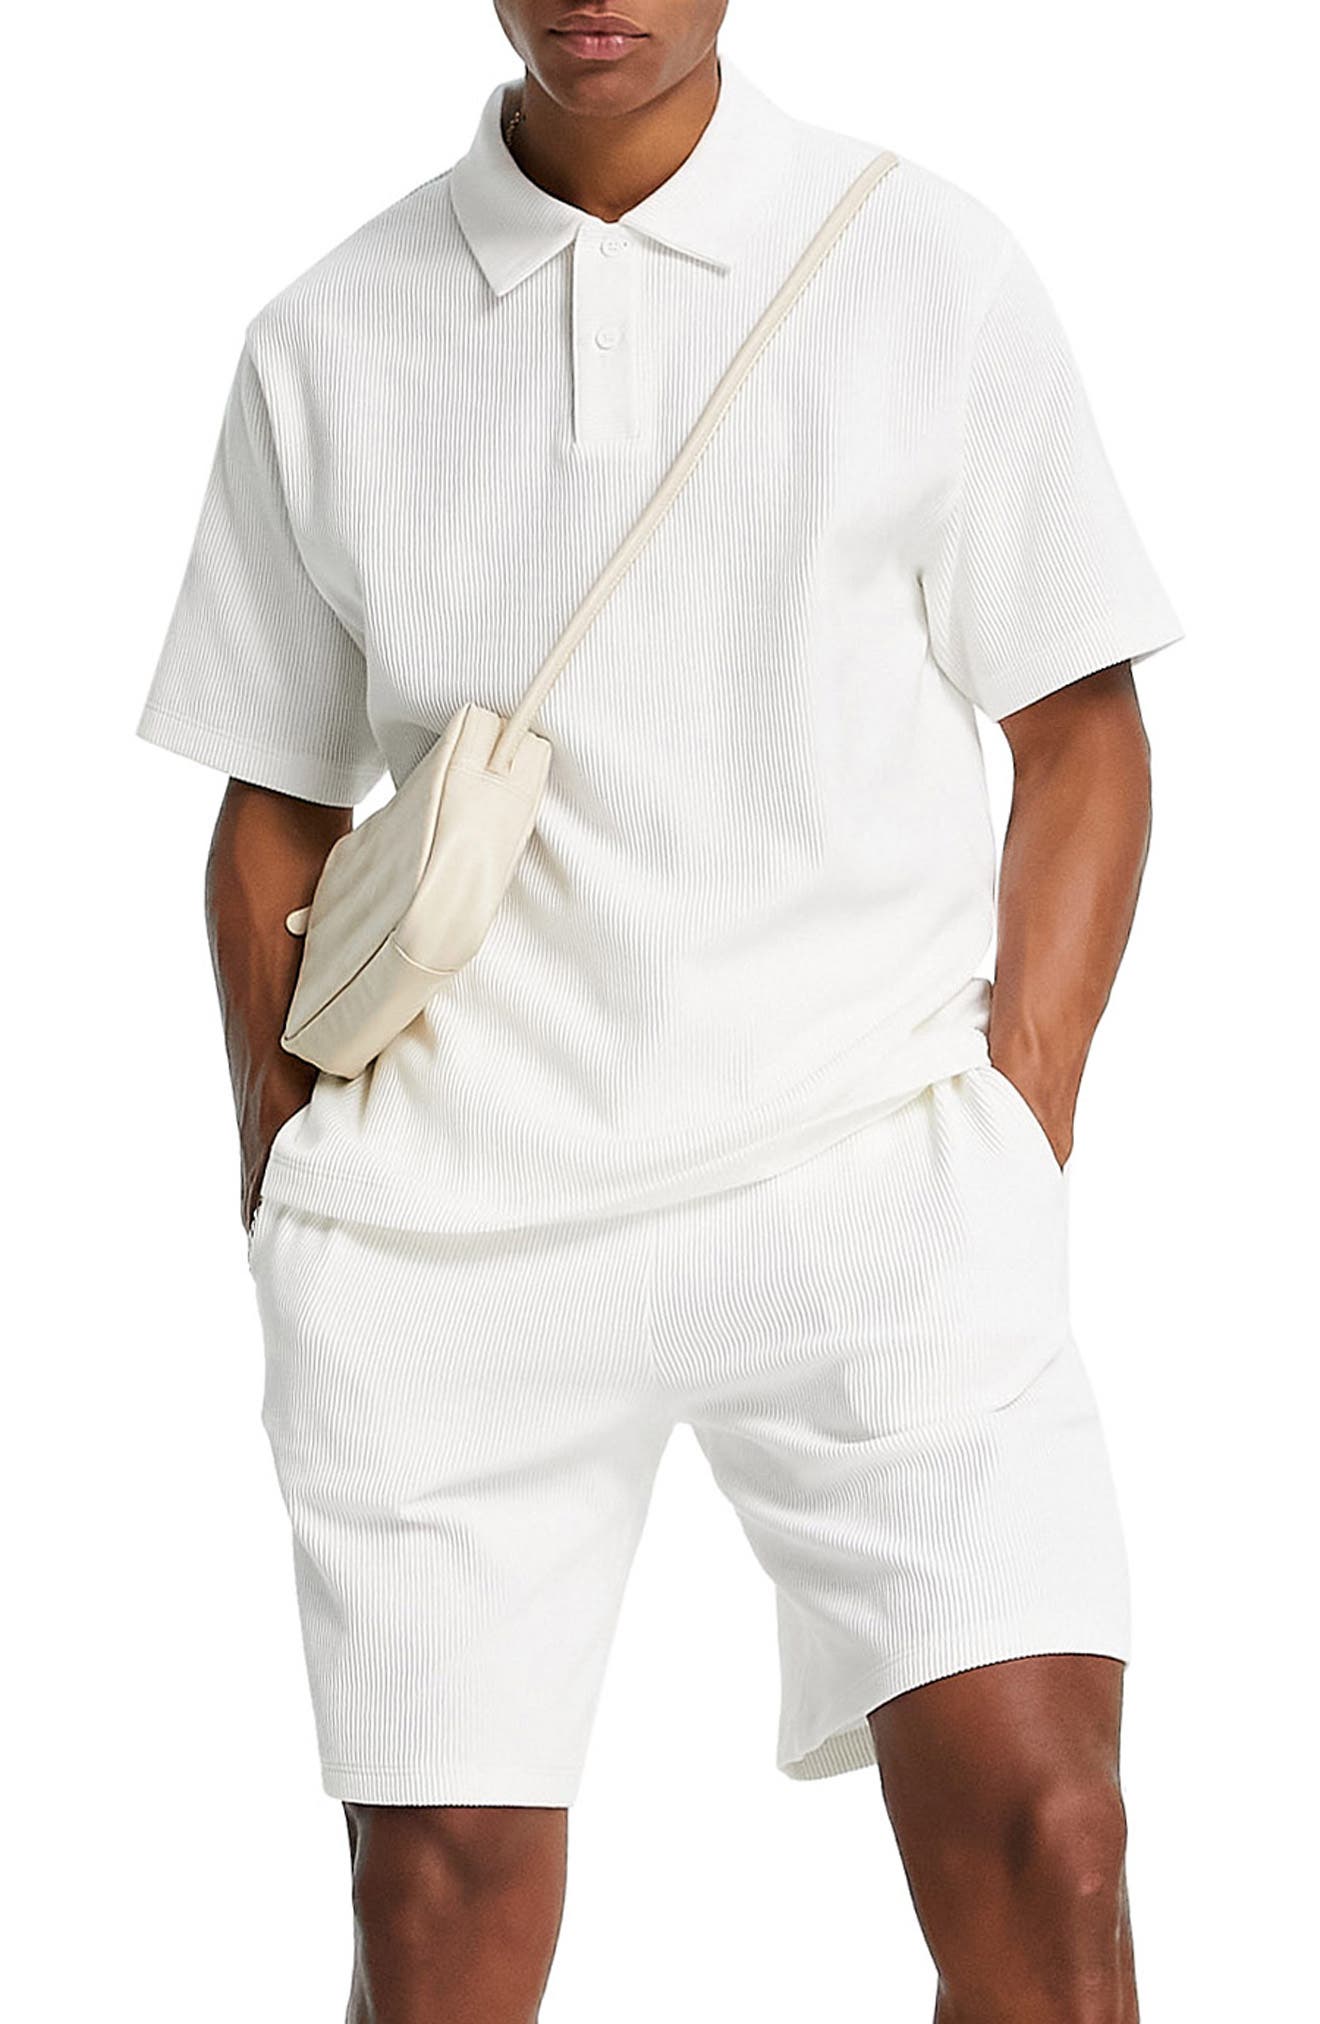 TOPMAN Mens light grey stripe trendy smart shirt Size S/M/L/XL NEW TOPSHOP 